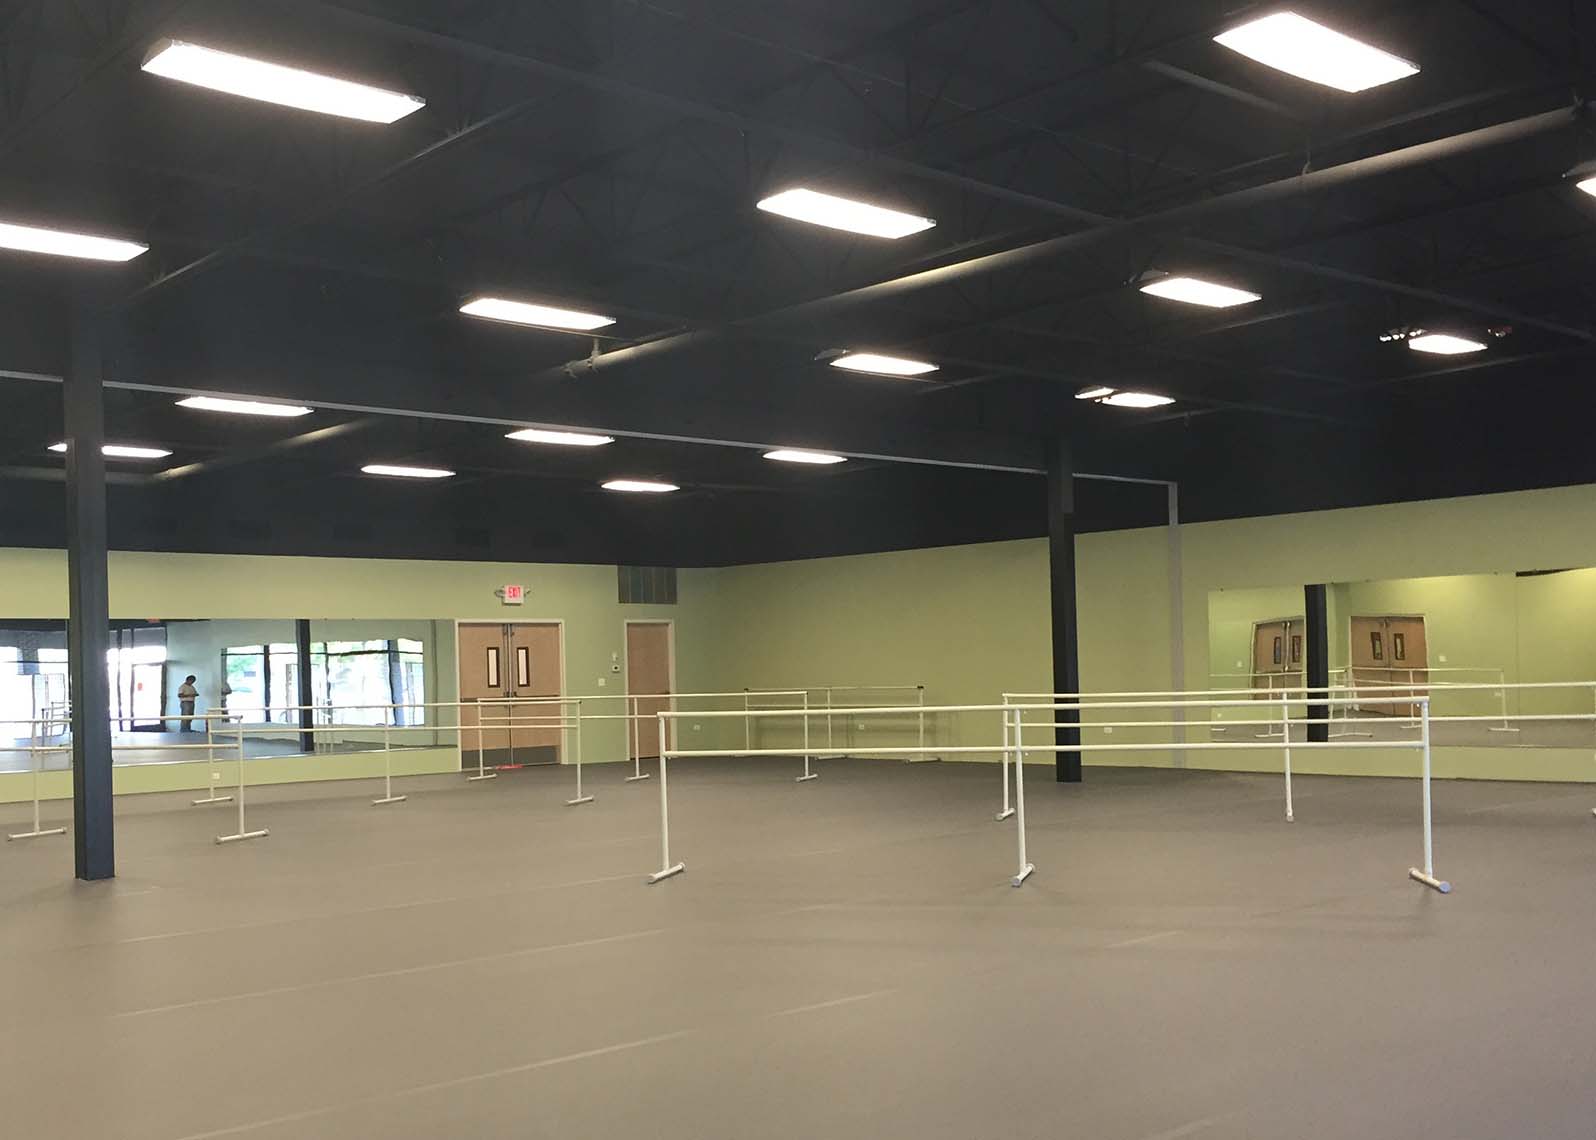 Studio 5 at Dance Center Evanston with portal ballet barres set up in the room